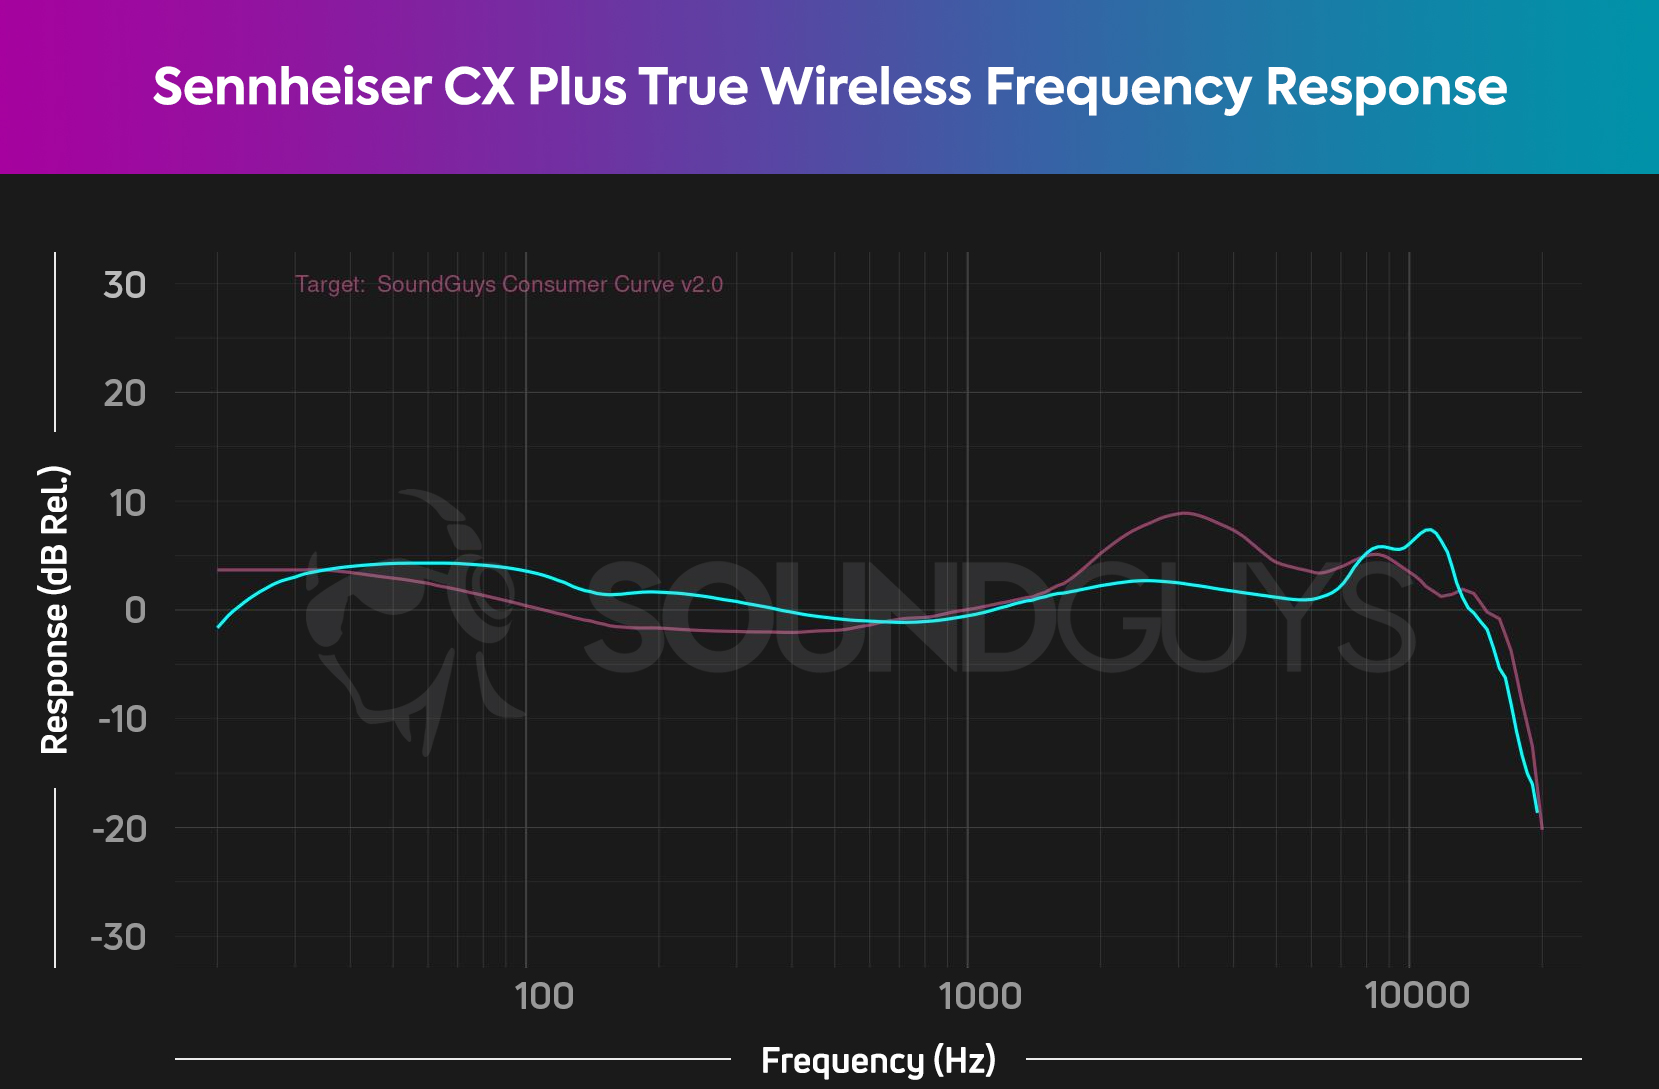 Sennheiser CX Plus TWS frequency response chart.